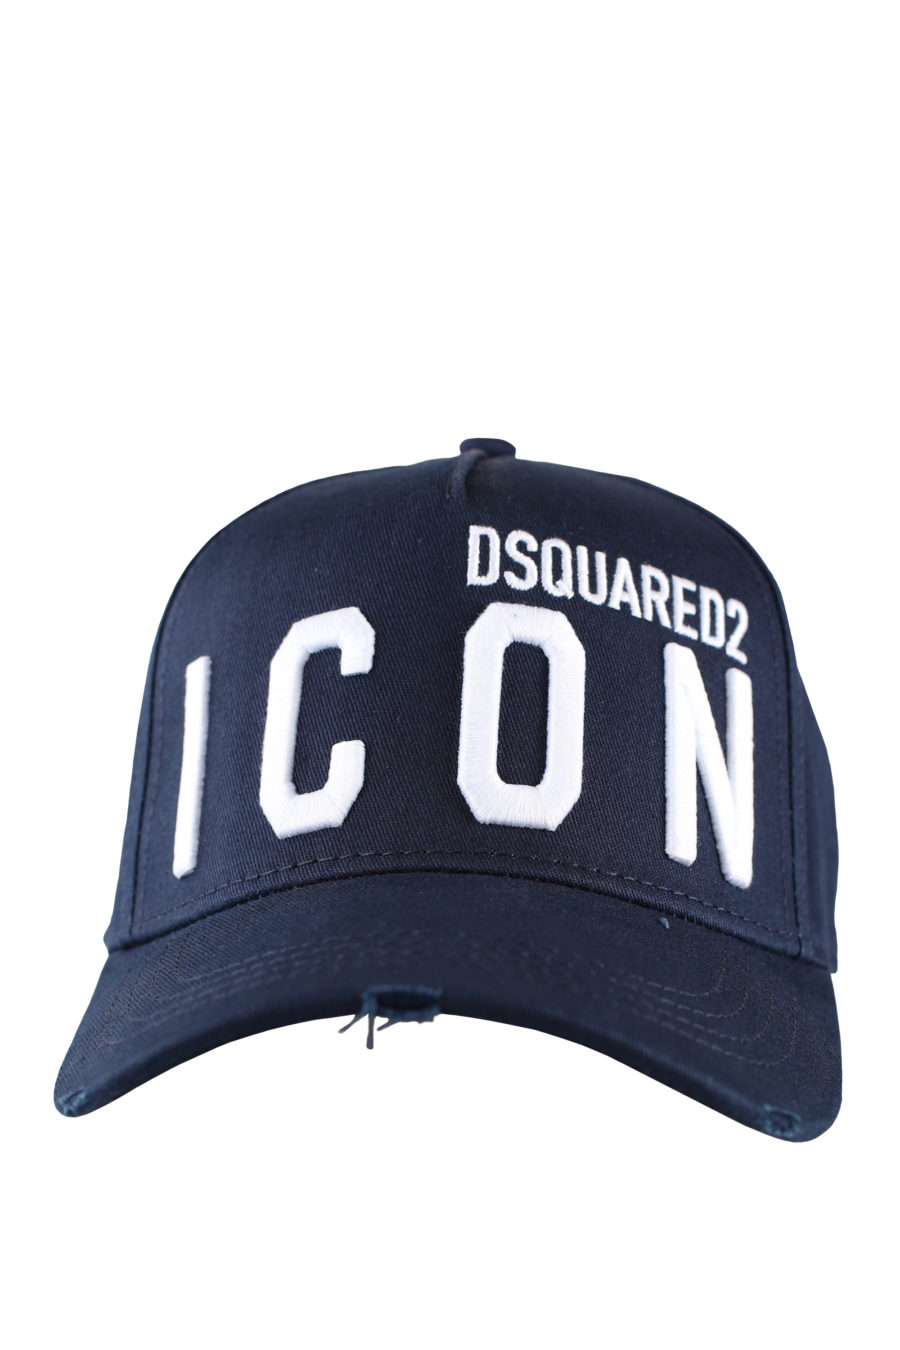 Adjustable blue cap with white "icon" logo - IMG 0001